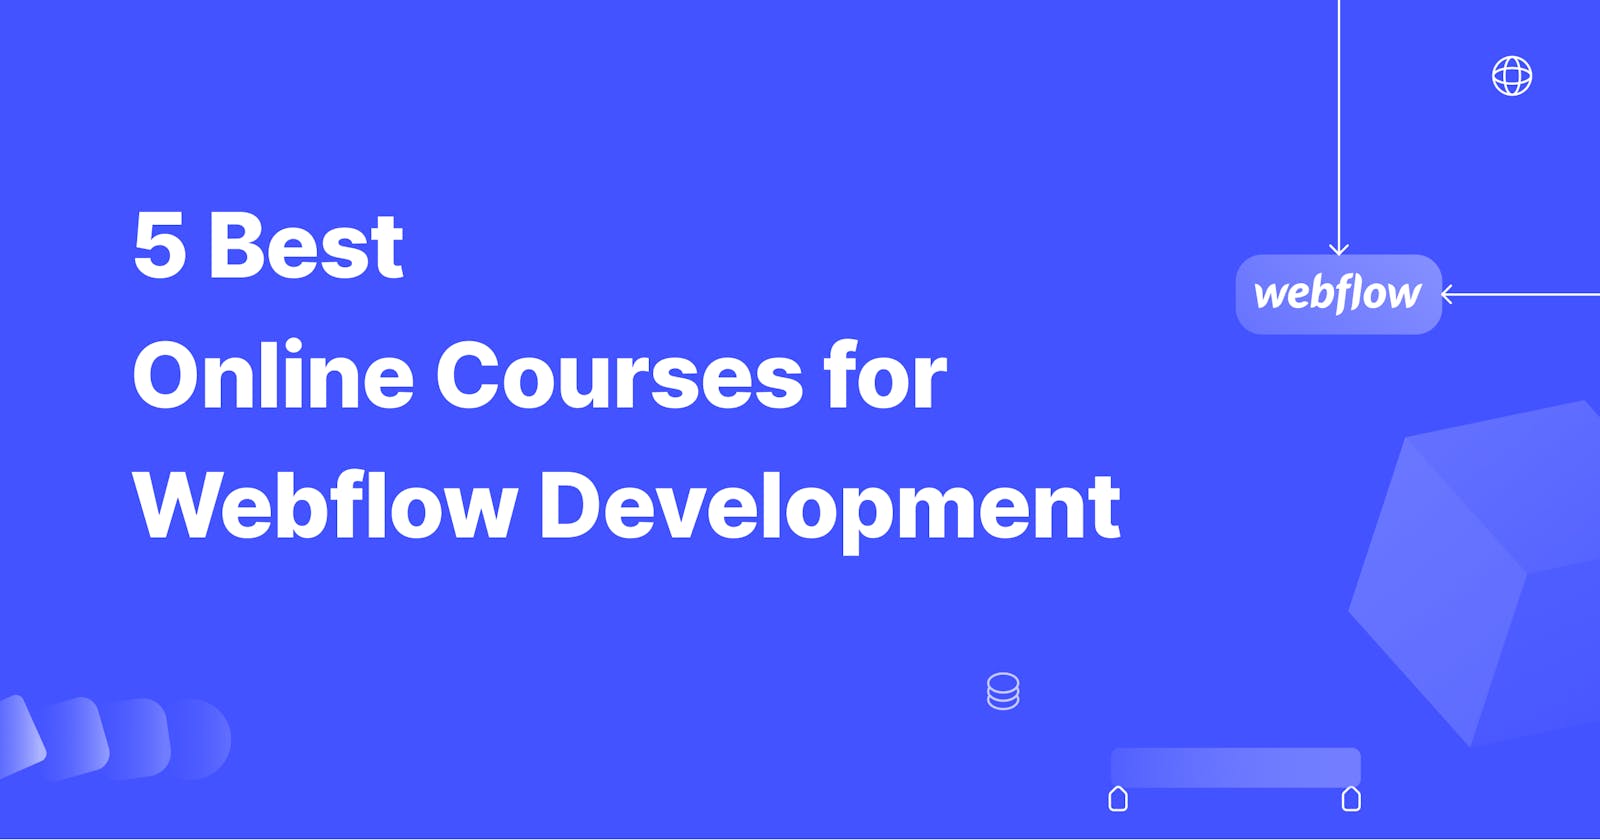 Mastering Webflow: The 5 Best Online Courses for Web Development